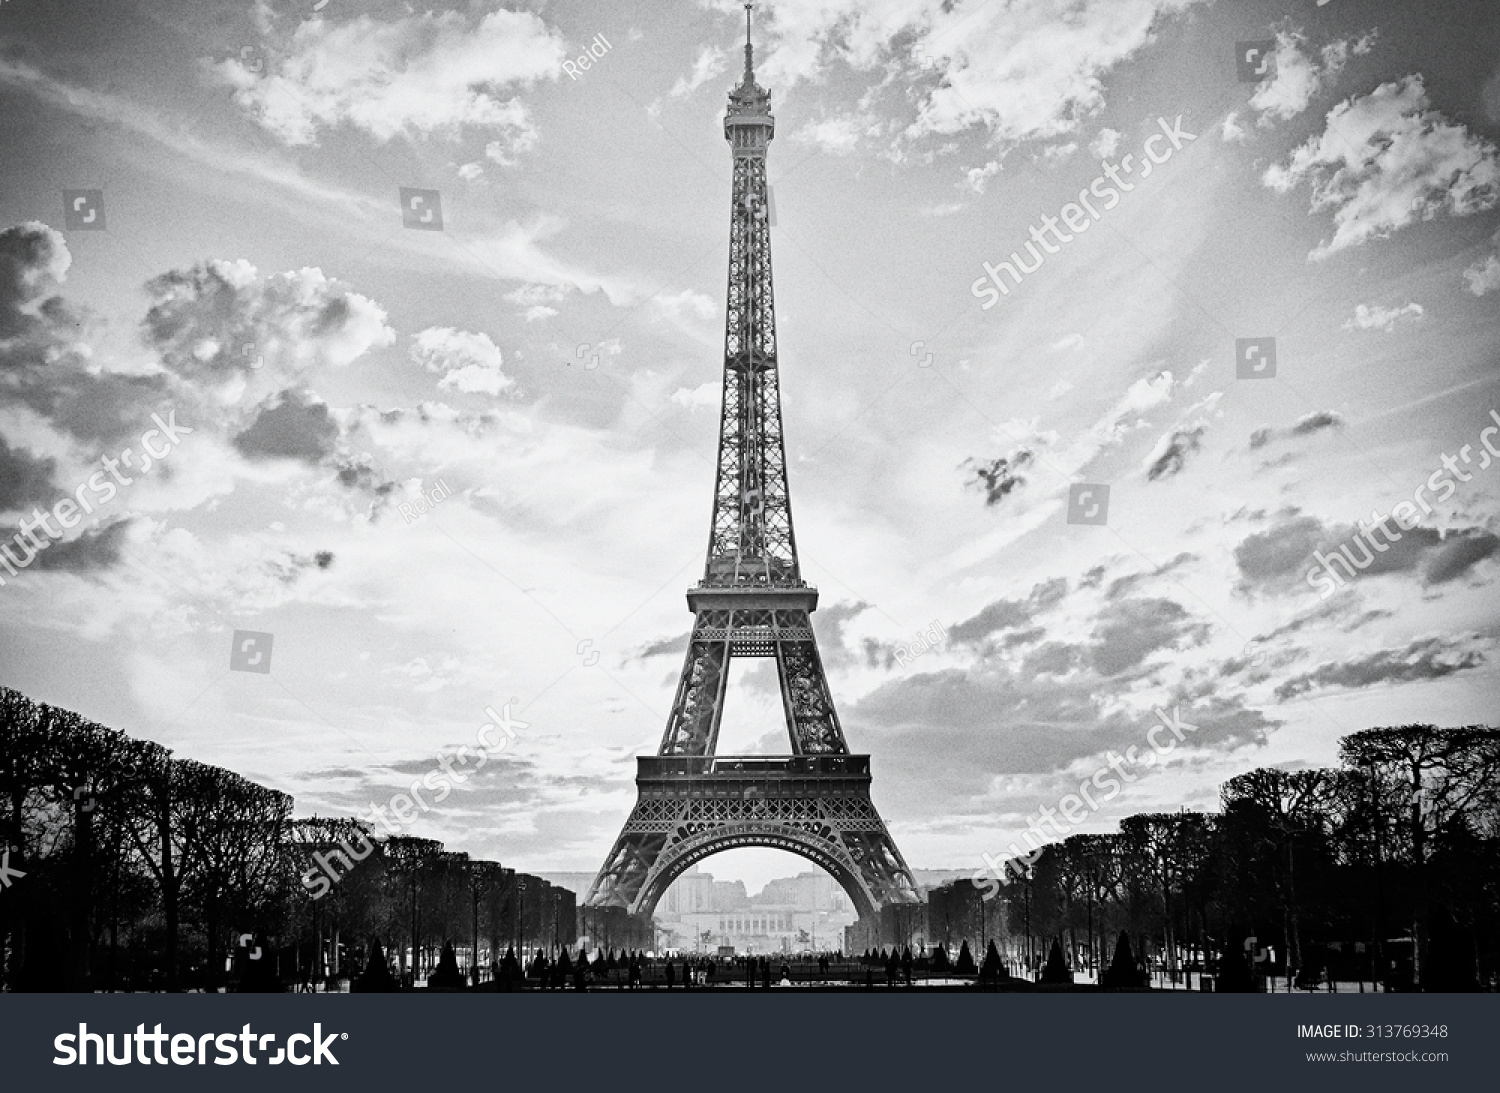 Париж картина черно белая